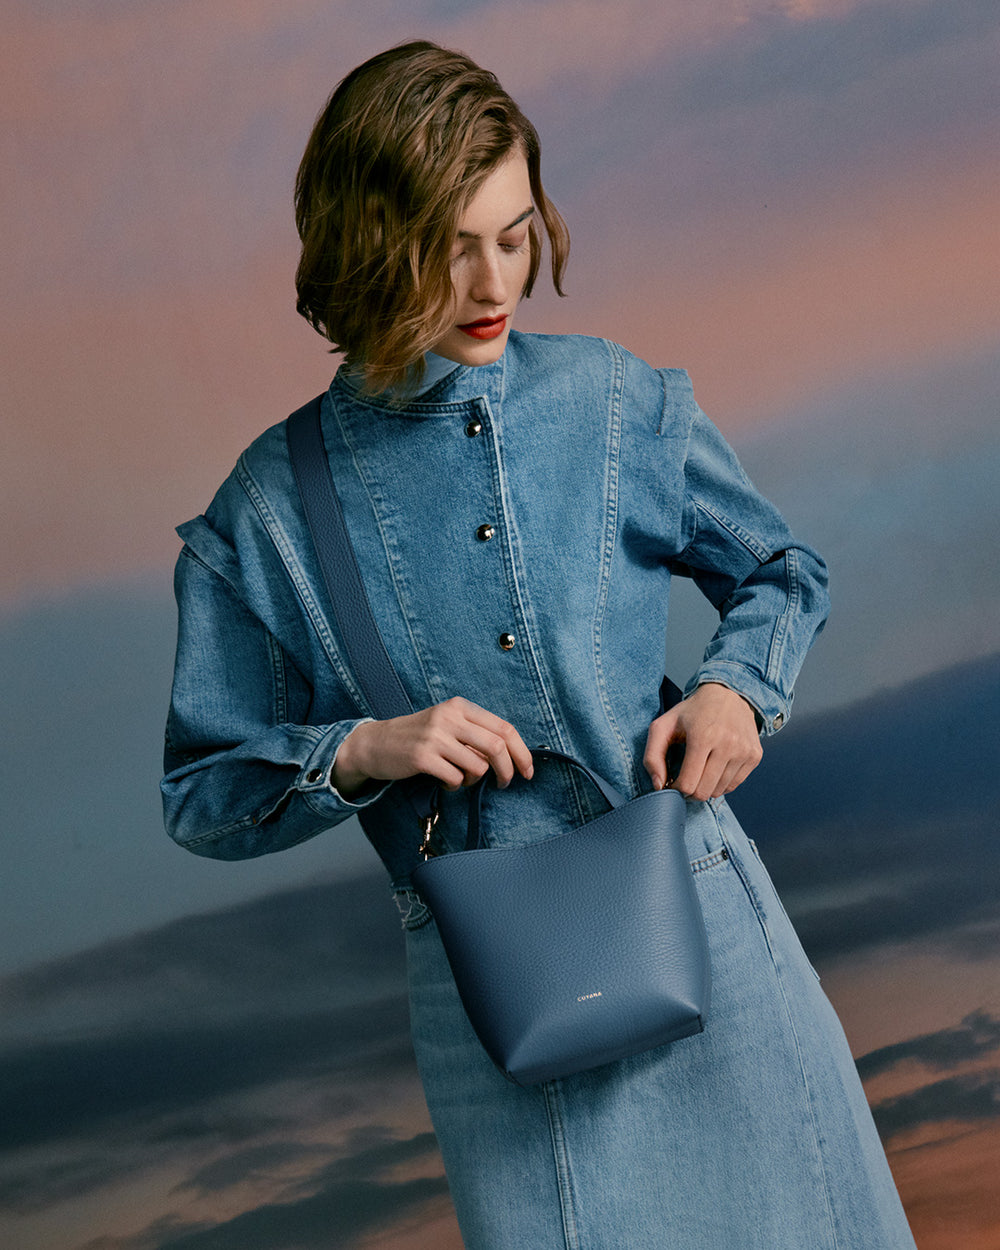 Woman in long sleeve shirt holding a handbag.